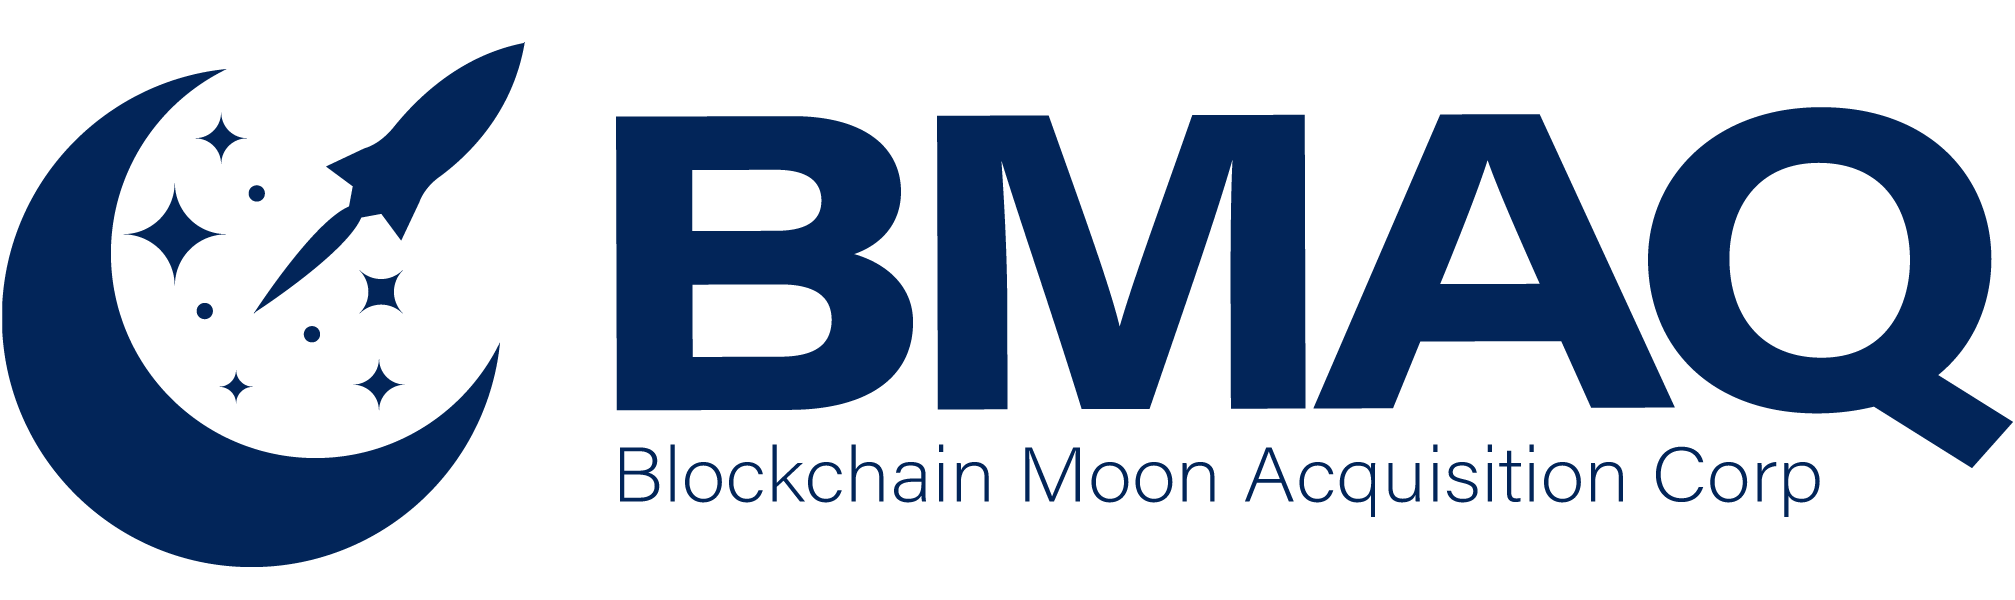 Blockchain Moon Acquisition Corp Logo.png